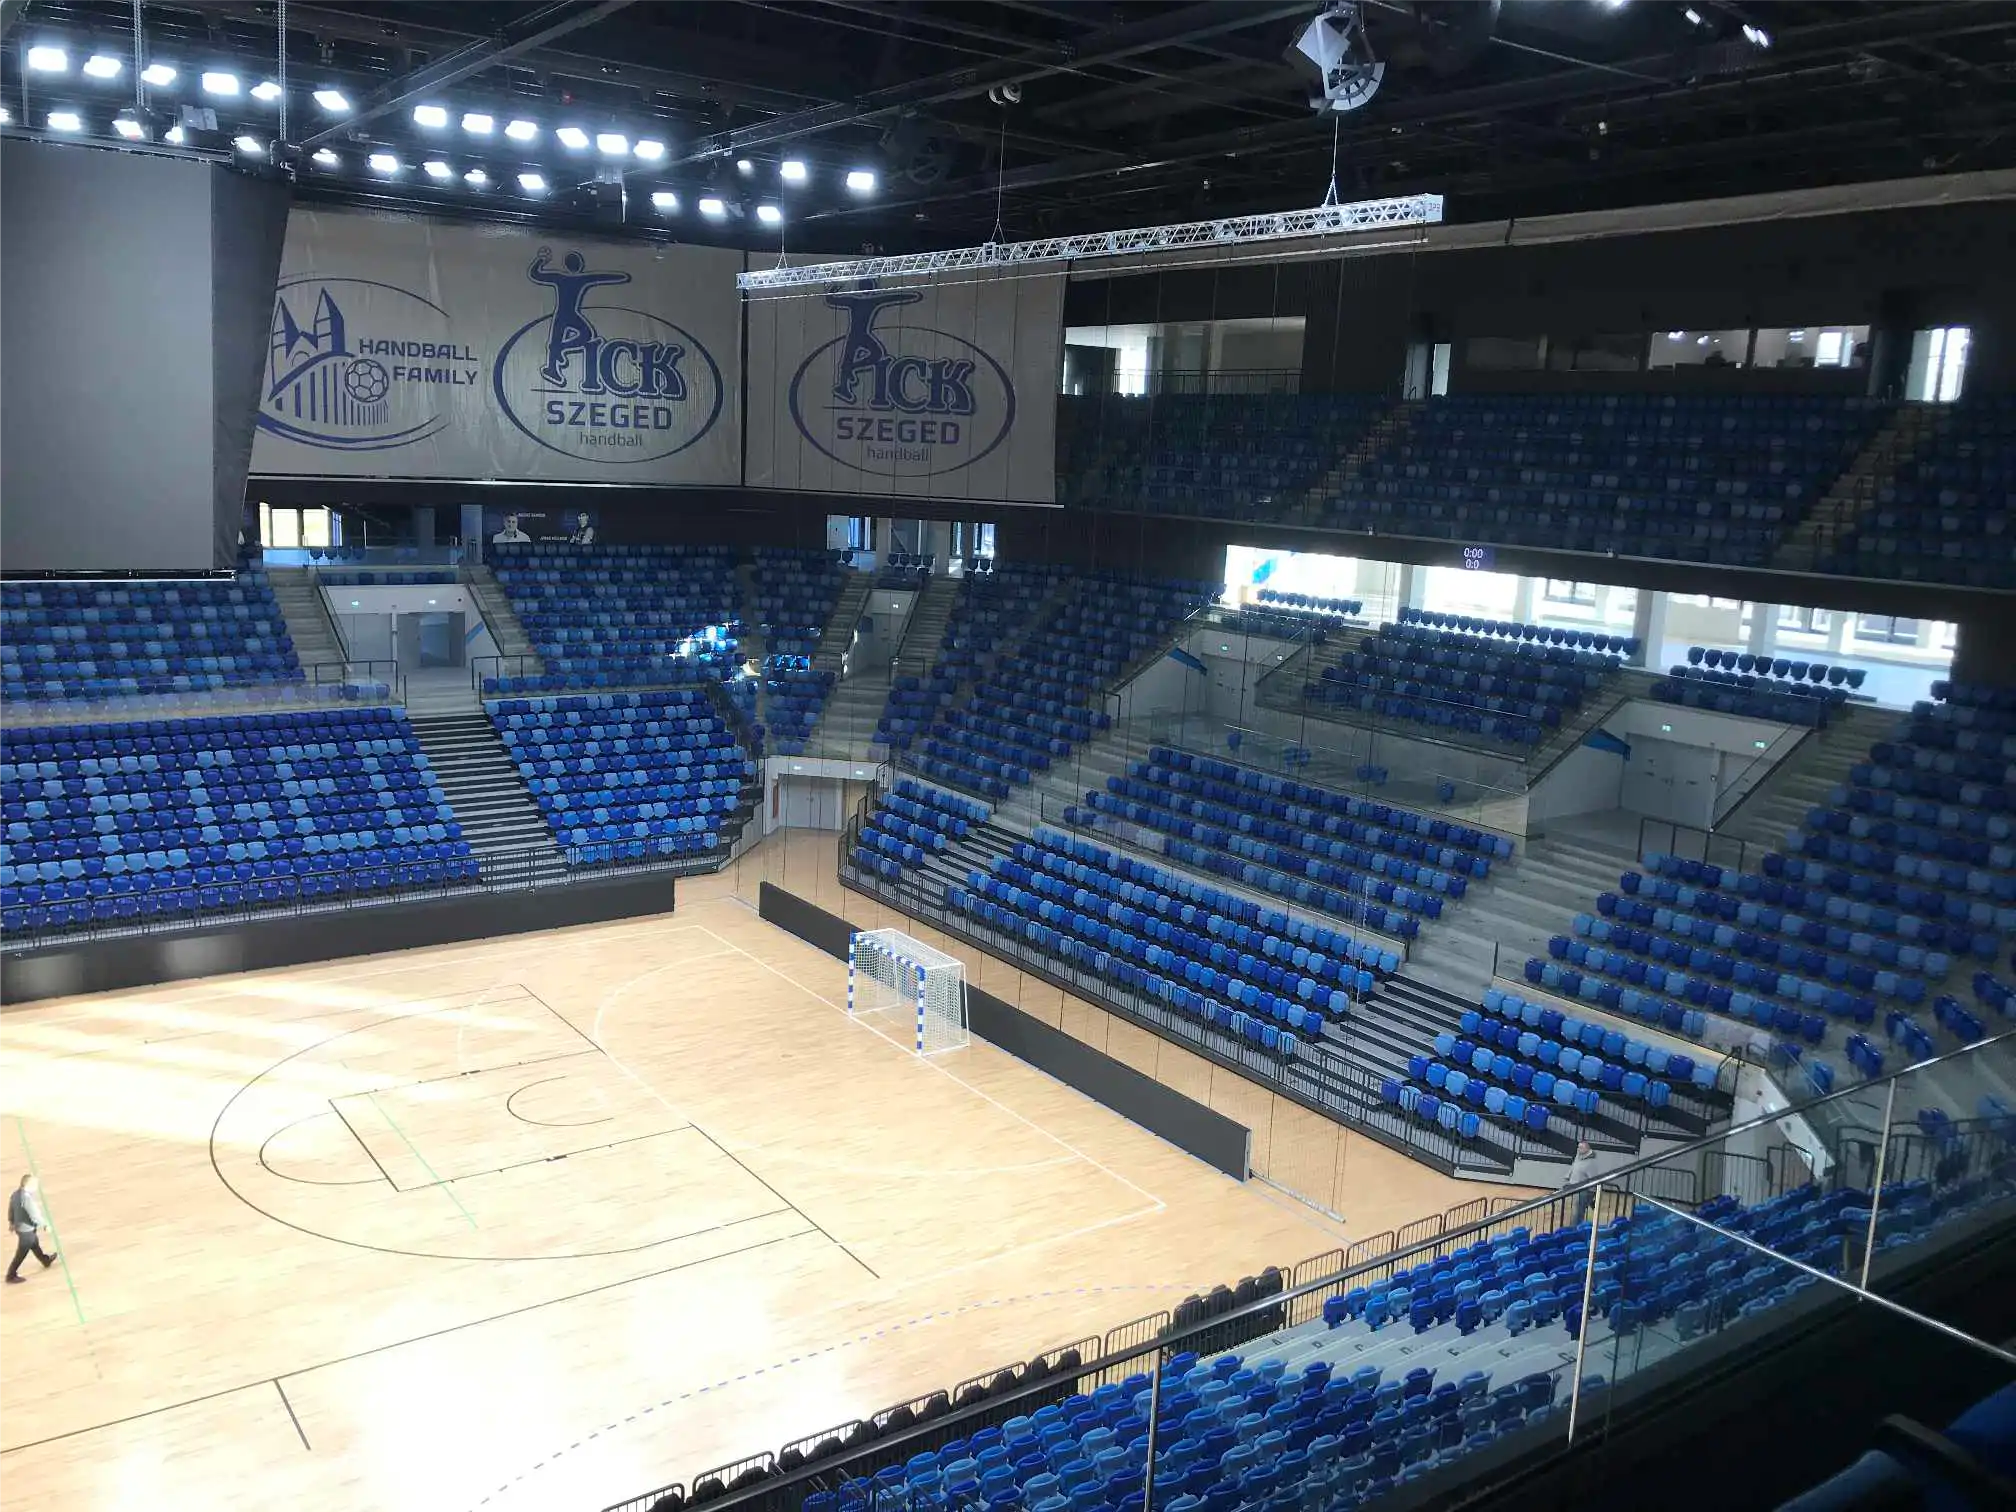 Szegedi Pick Arena